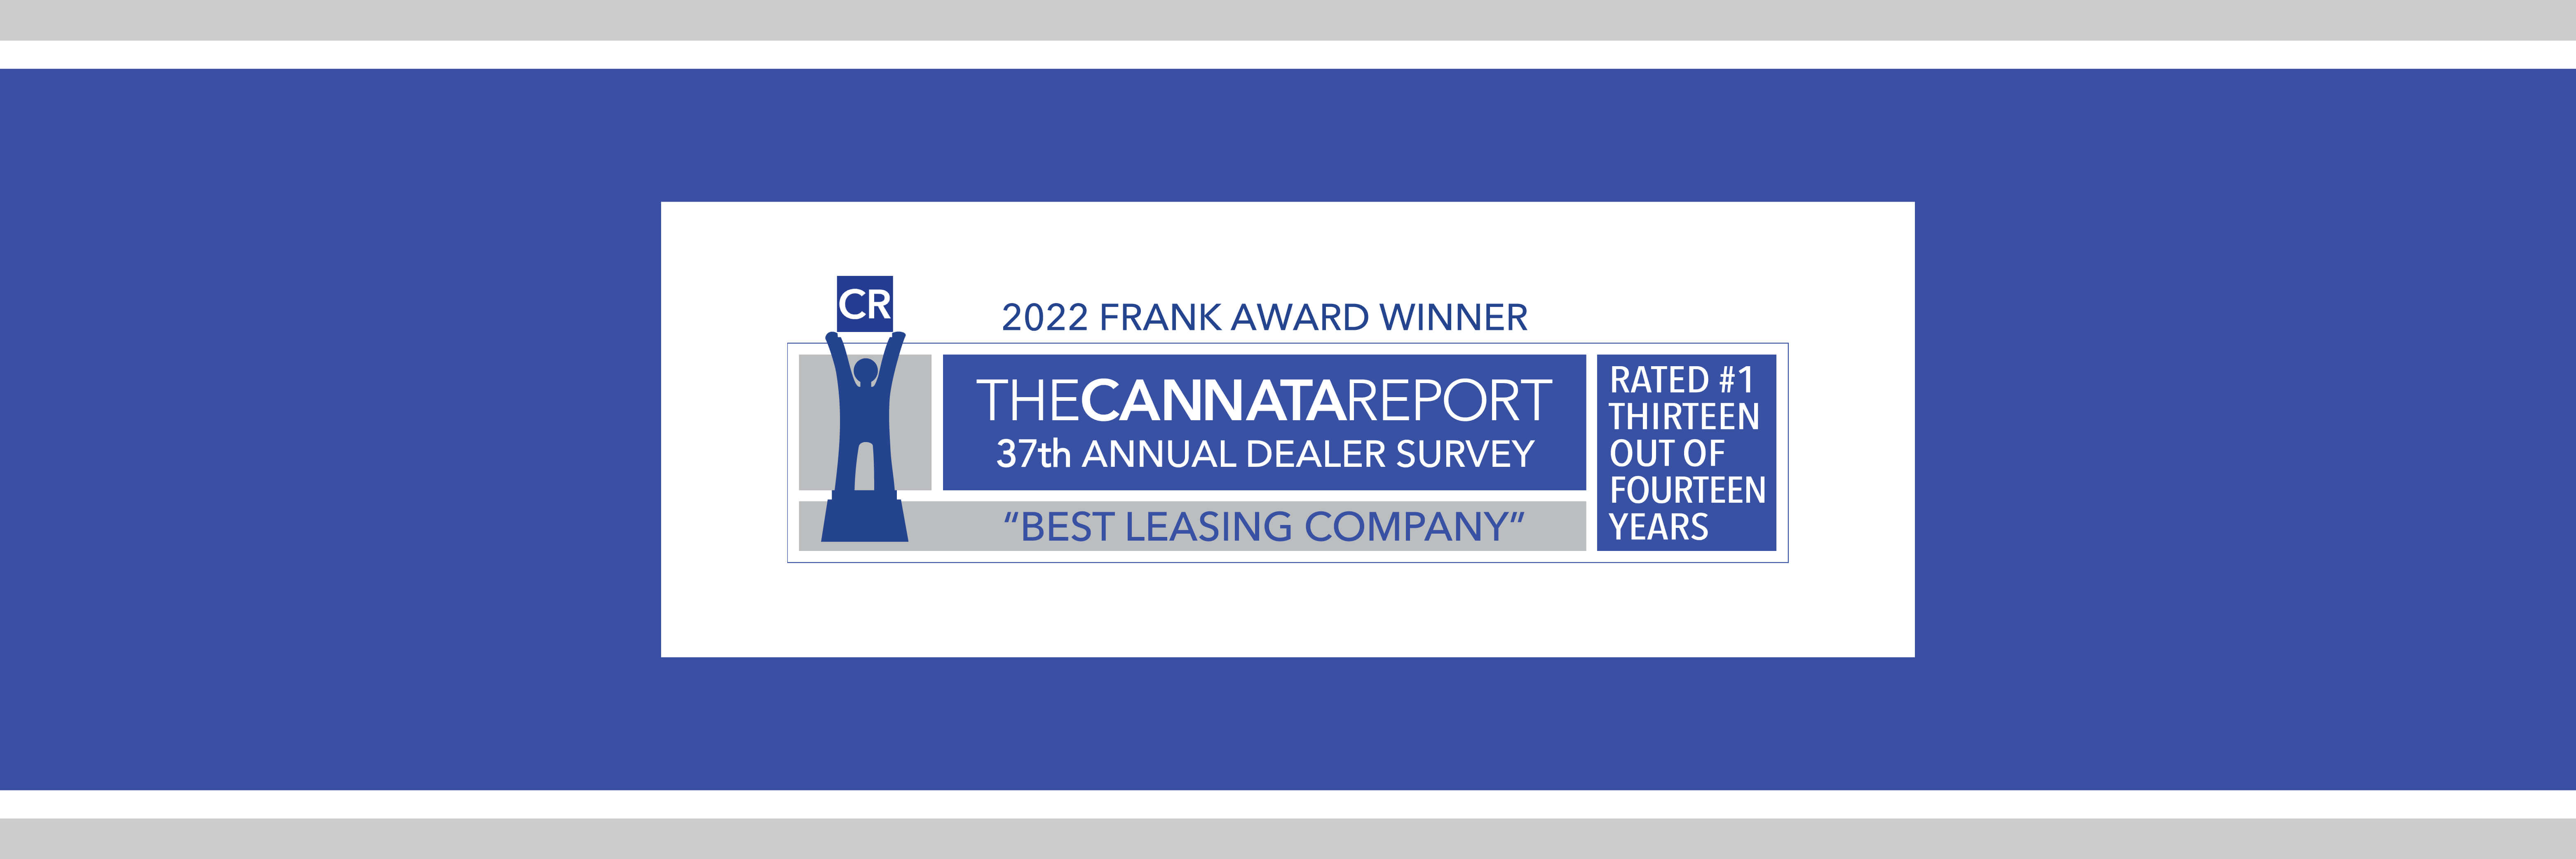 GreatAmerica Wins Frank Award for Best Leasing Company in 2022